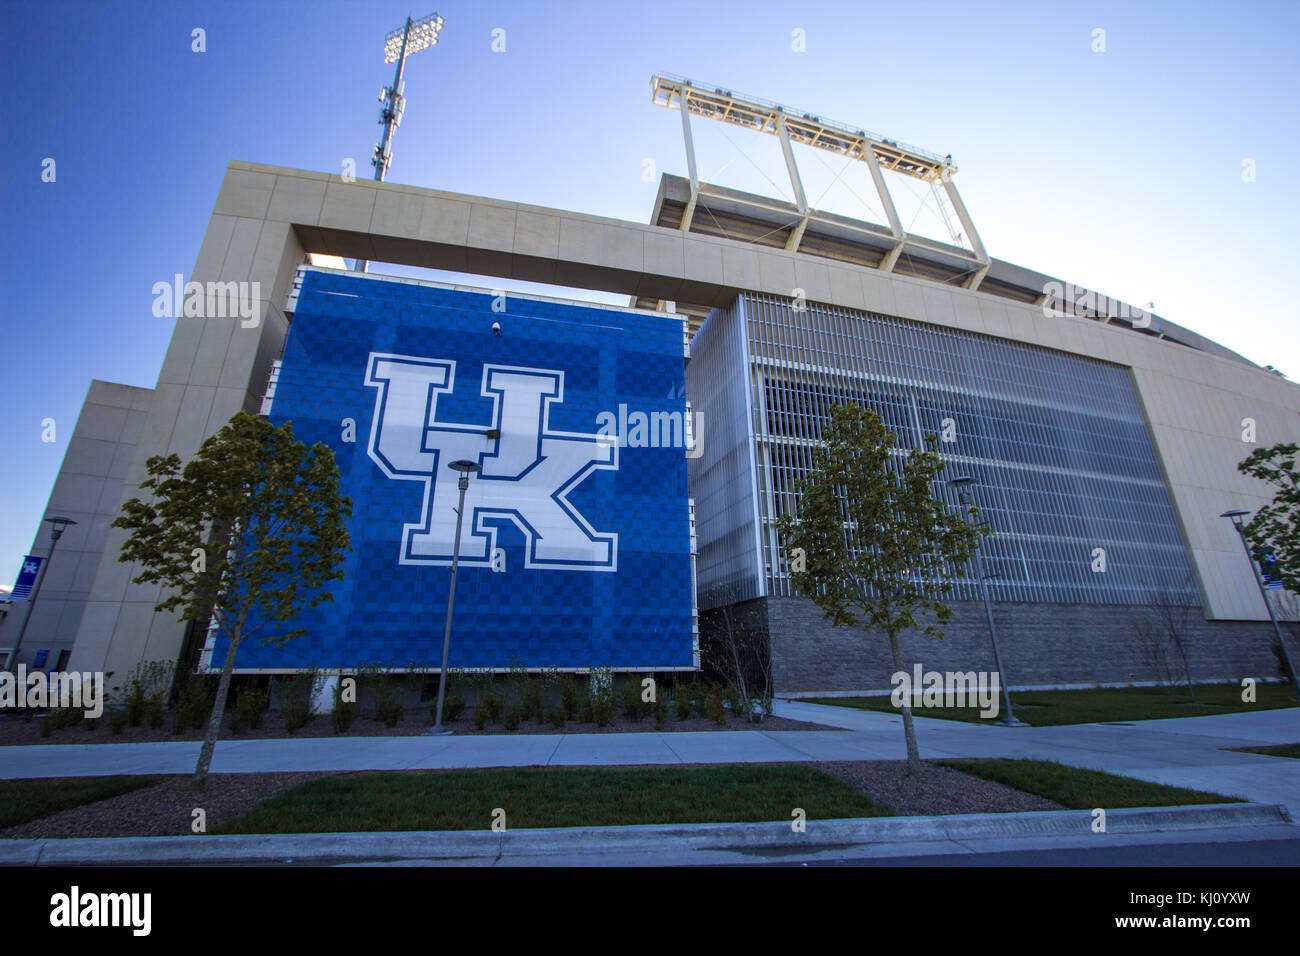 Lexington, Kentucky, USA - April 22, 2016: Exterior of the University of Kentucky Wildcats Commonweath football stadium with large U of K logo banner. Stock Photo